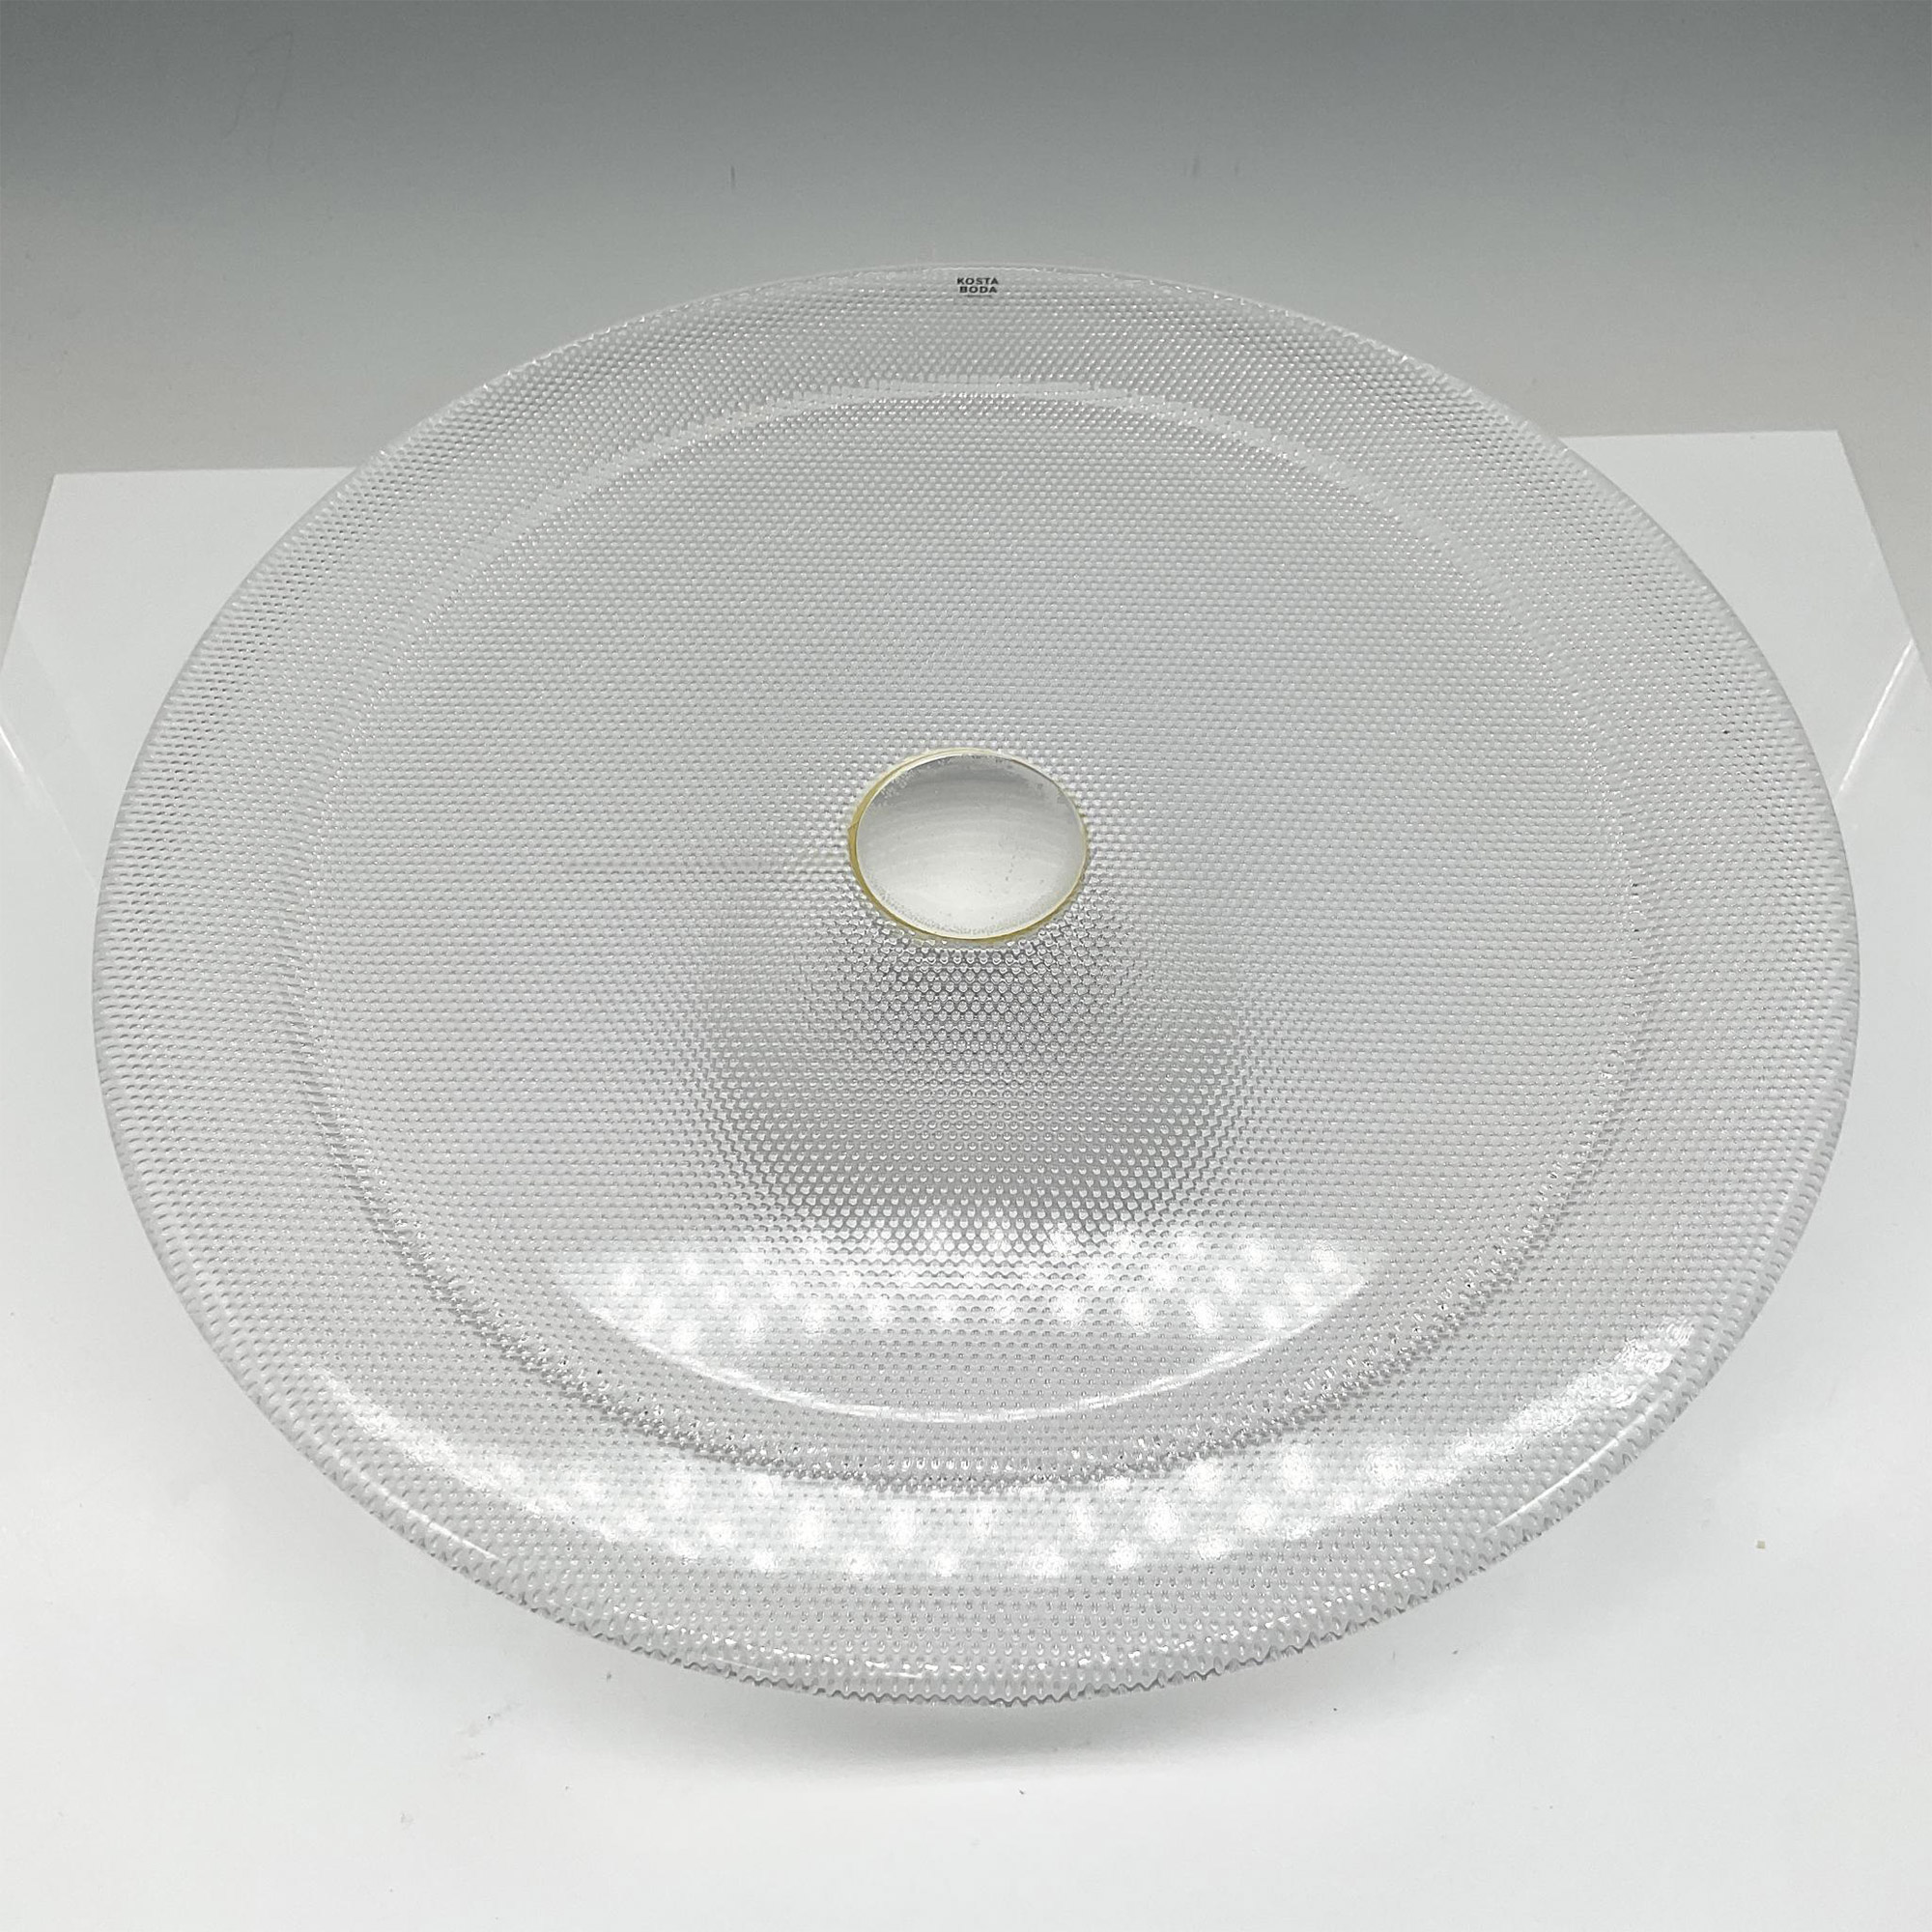 Kosta Boda Glass Limelight Cake Plate - Image 2 of 4